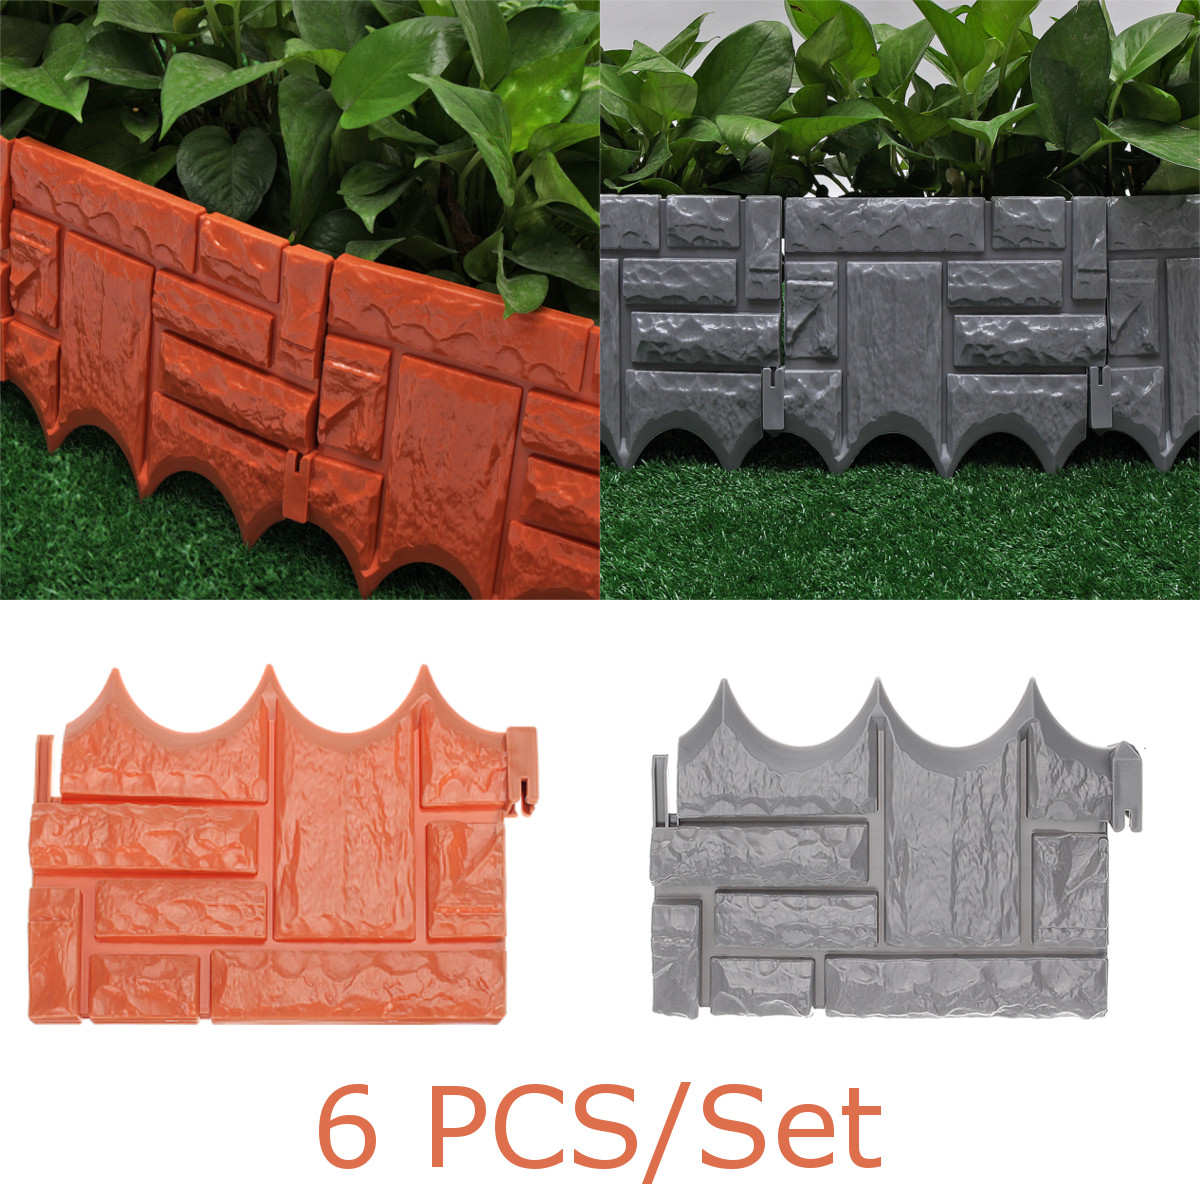 6Pcs-Plastic-Fence-Outdoor-Garden-Lawn-Edging-Yard-Plant-Border-Panel-Paths-Garden-Landscape-Decorat-1579764-1